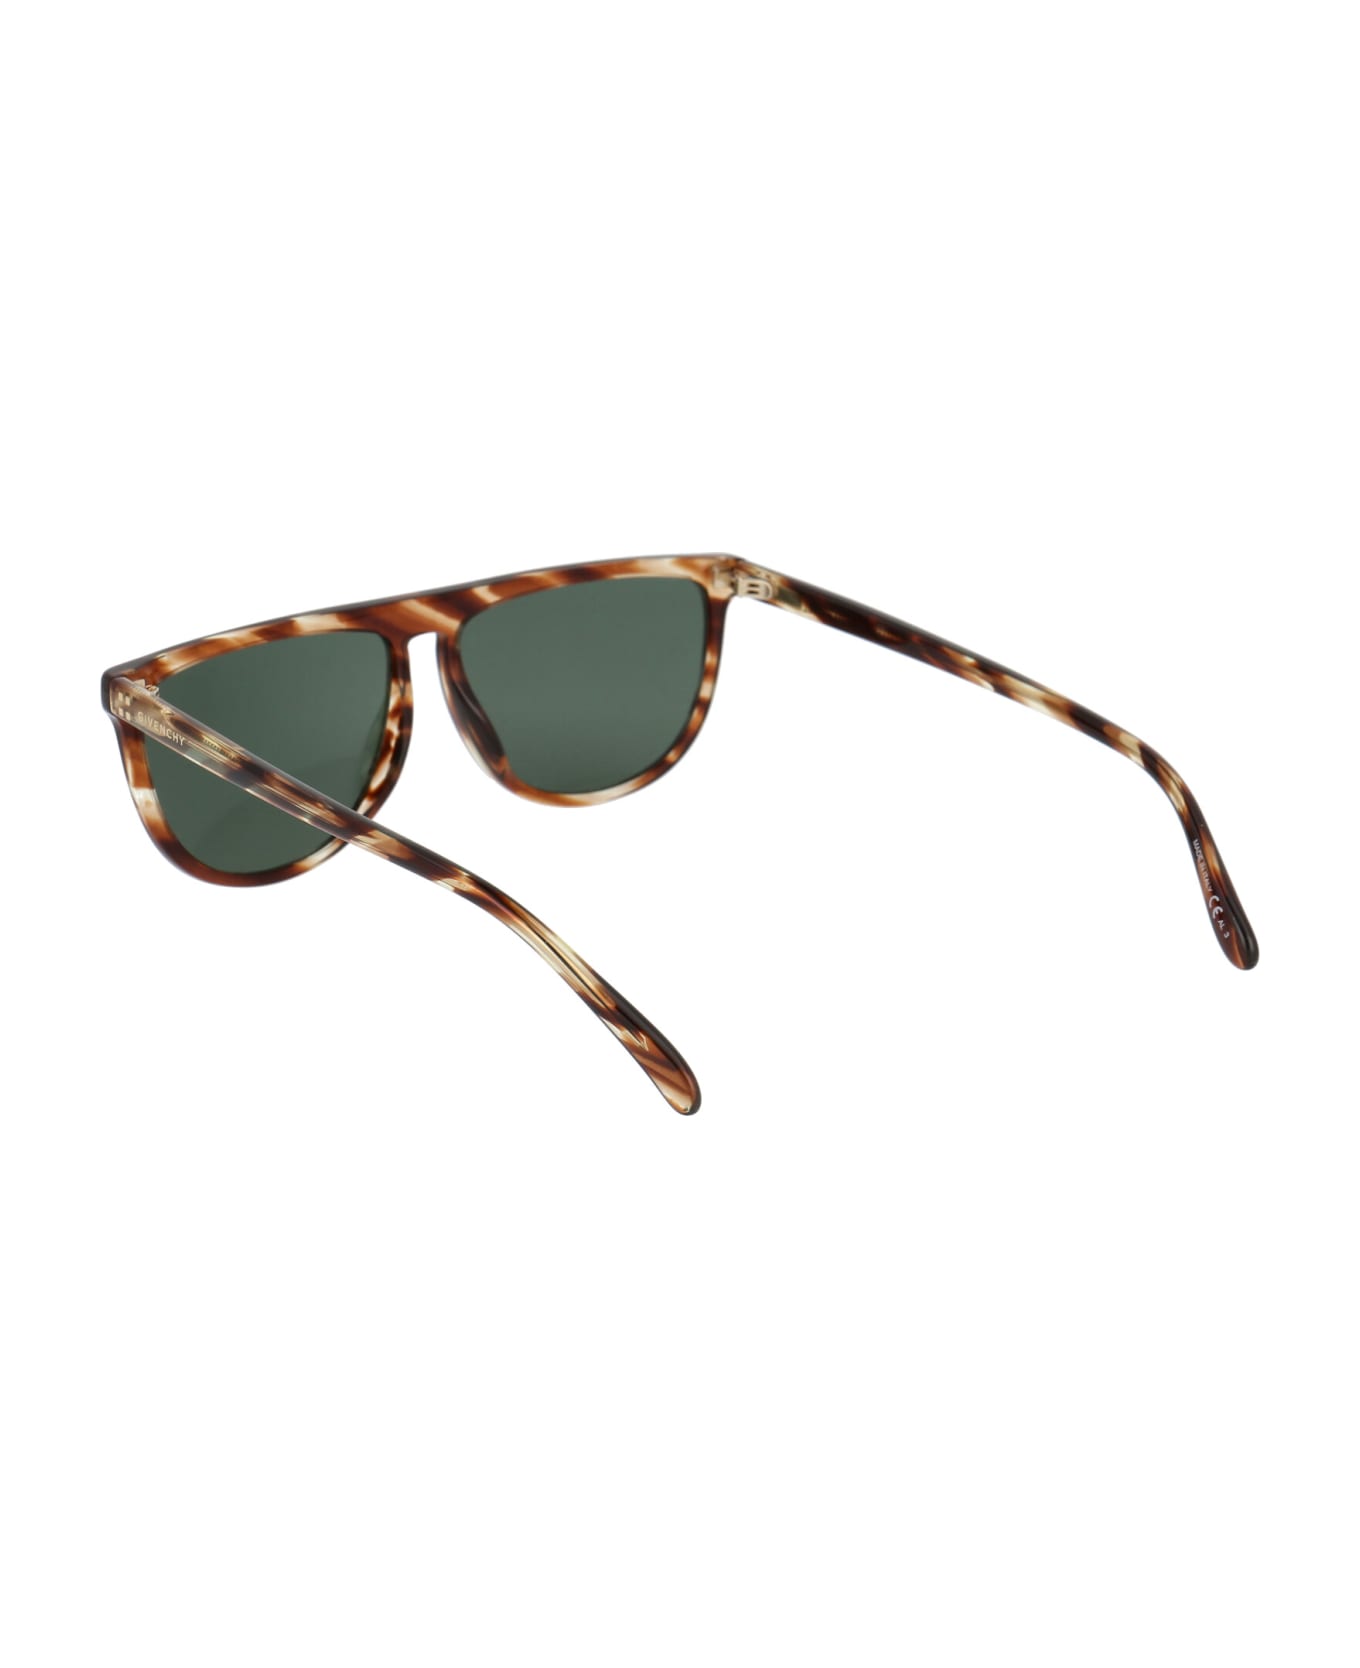 Givenchy Eyewear Gv 7145/s Sunglasses - EX4QT BROWN HORN サングラス